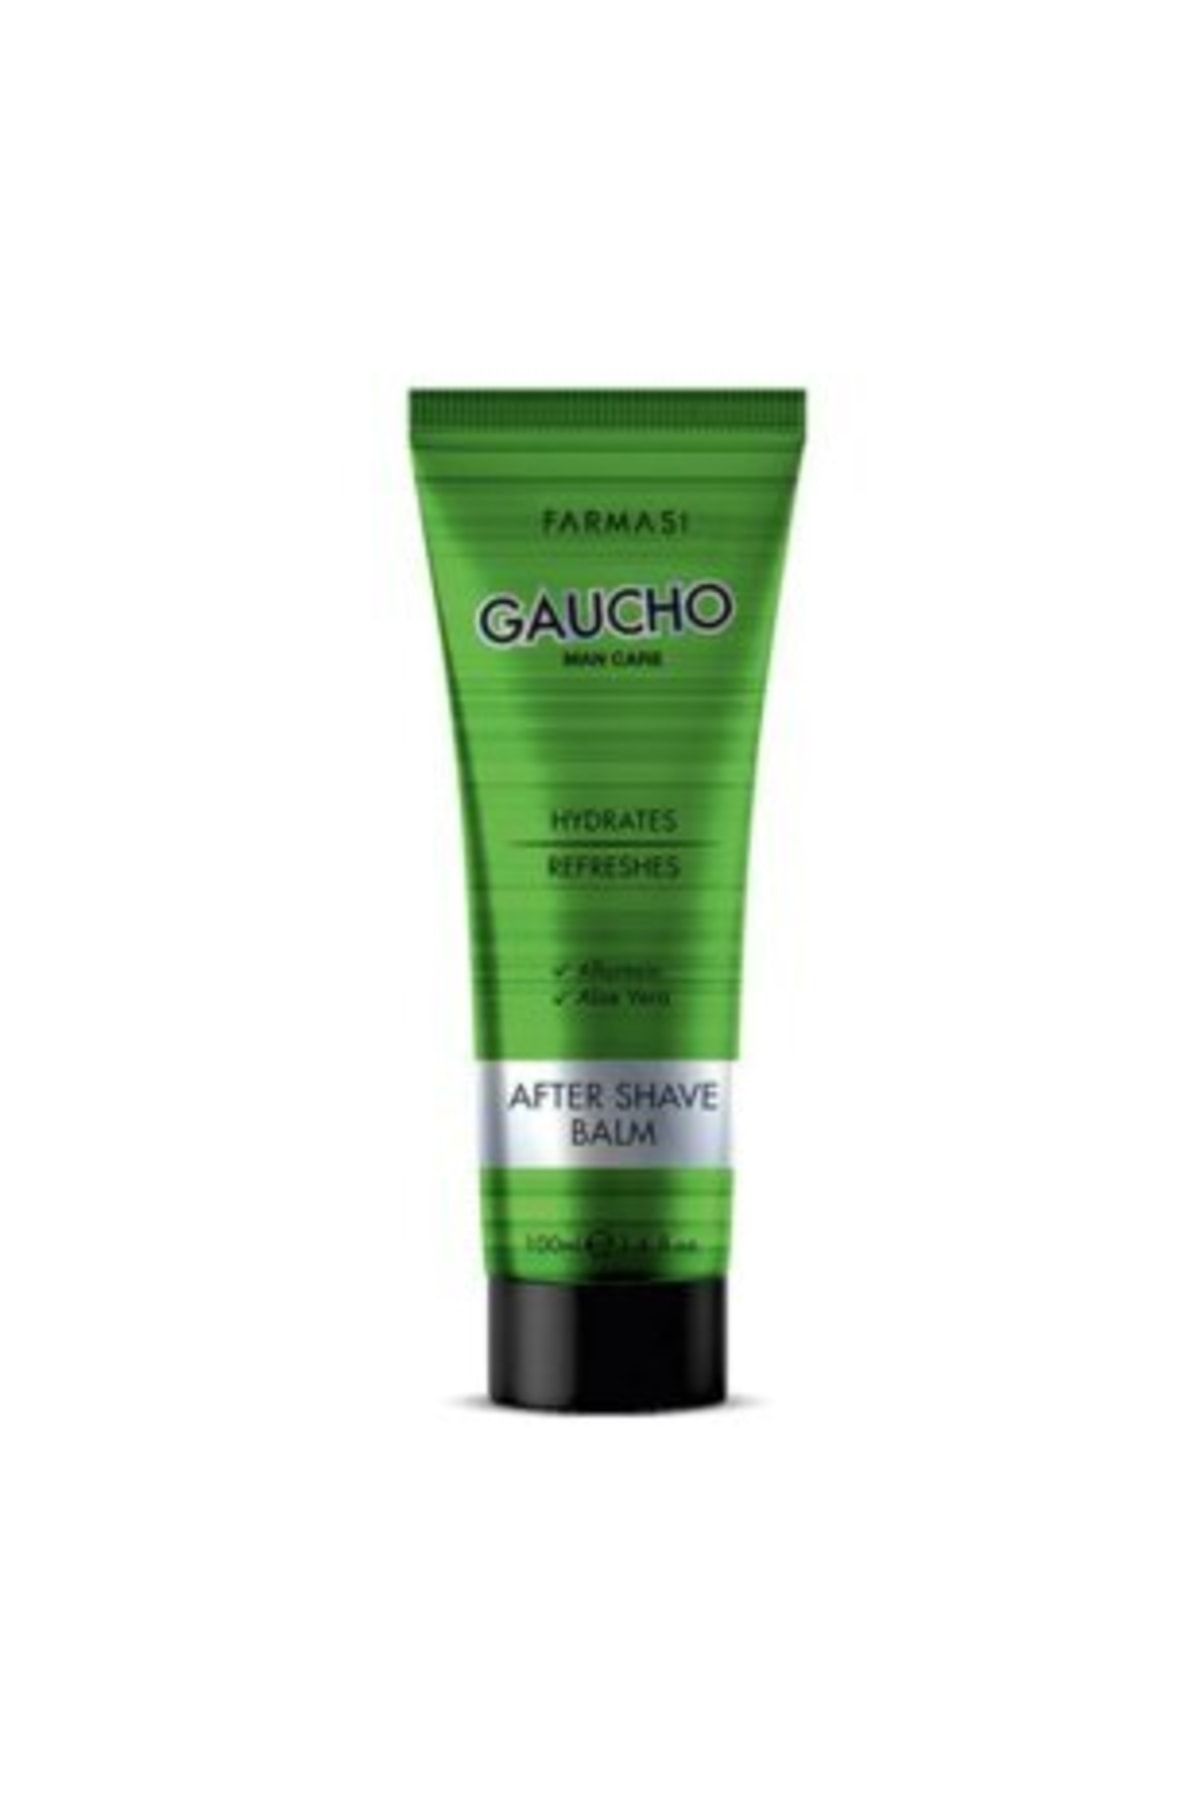 Farmasi Gaucho After Shave Balm 100 Ml 2021